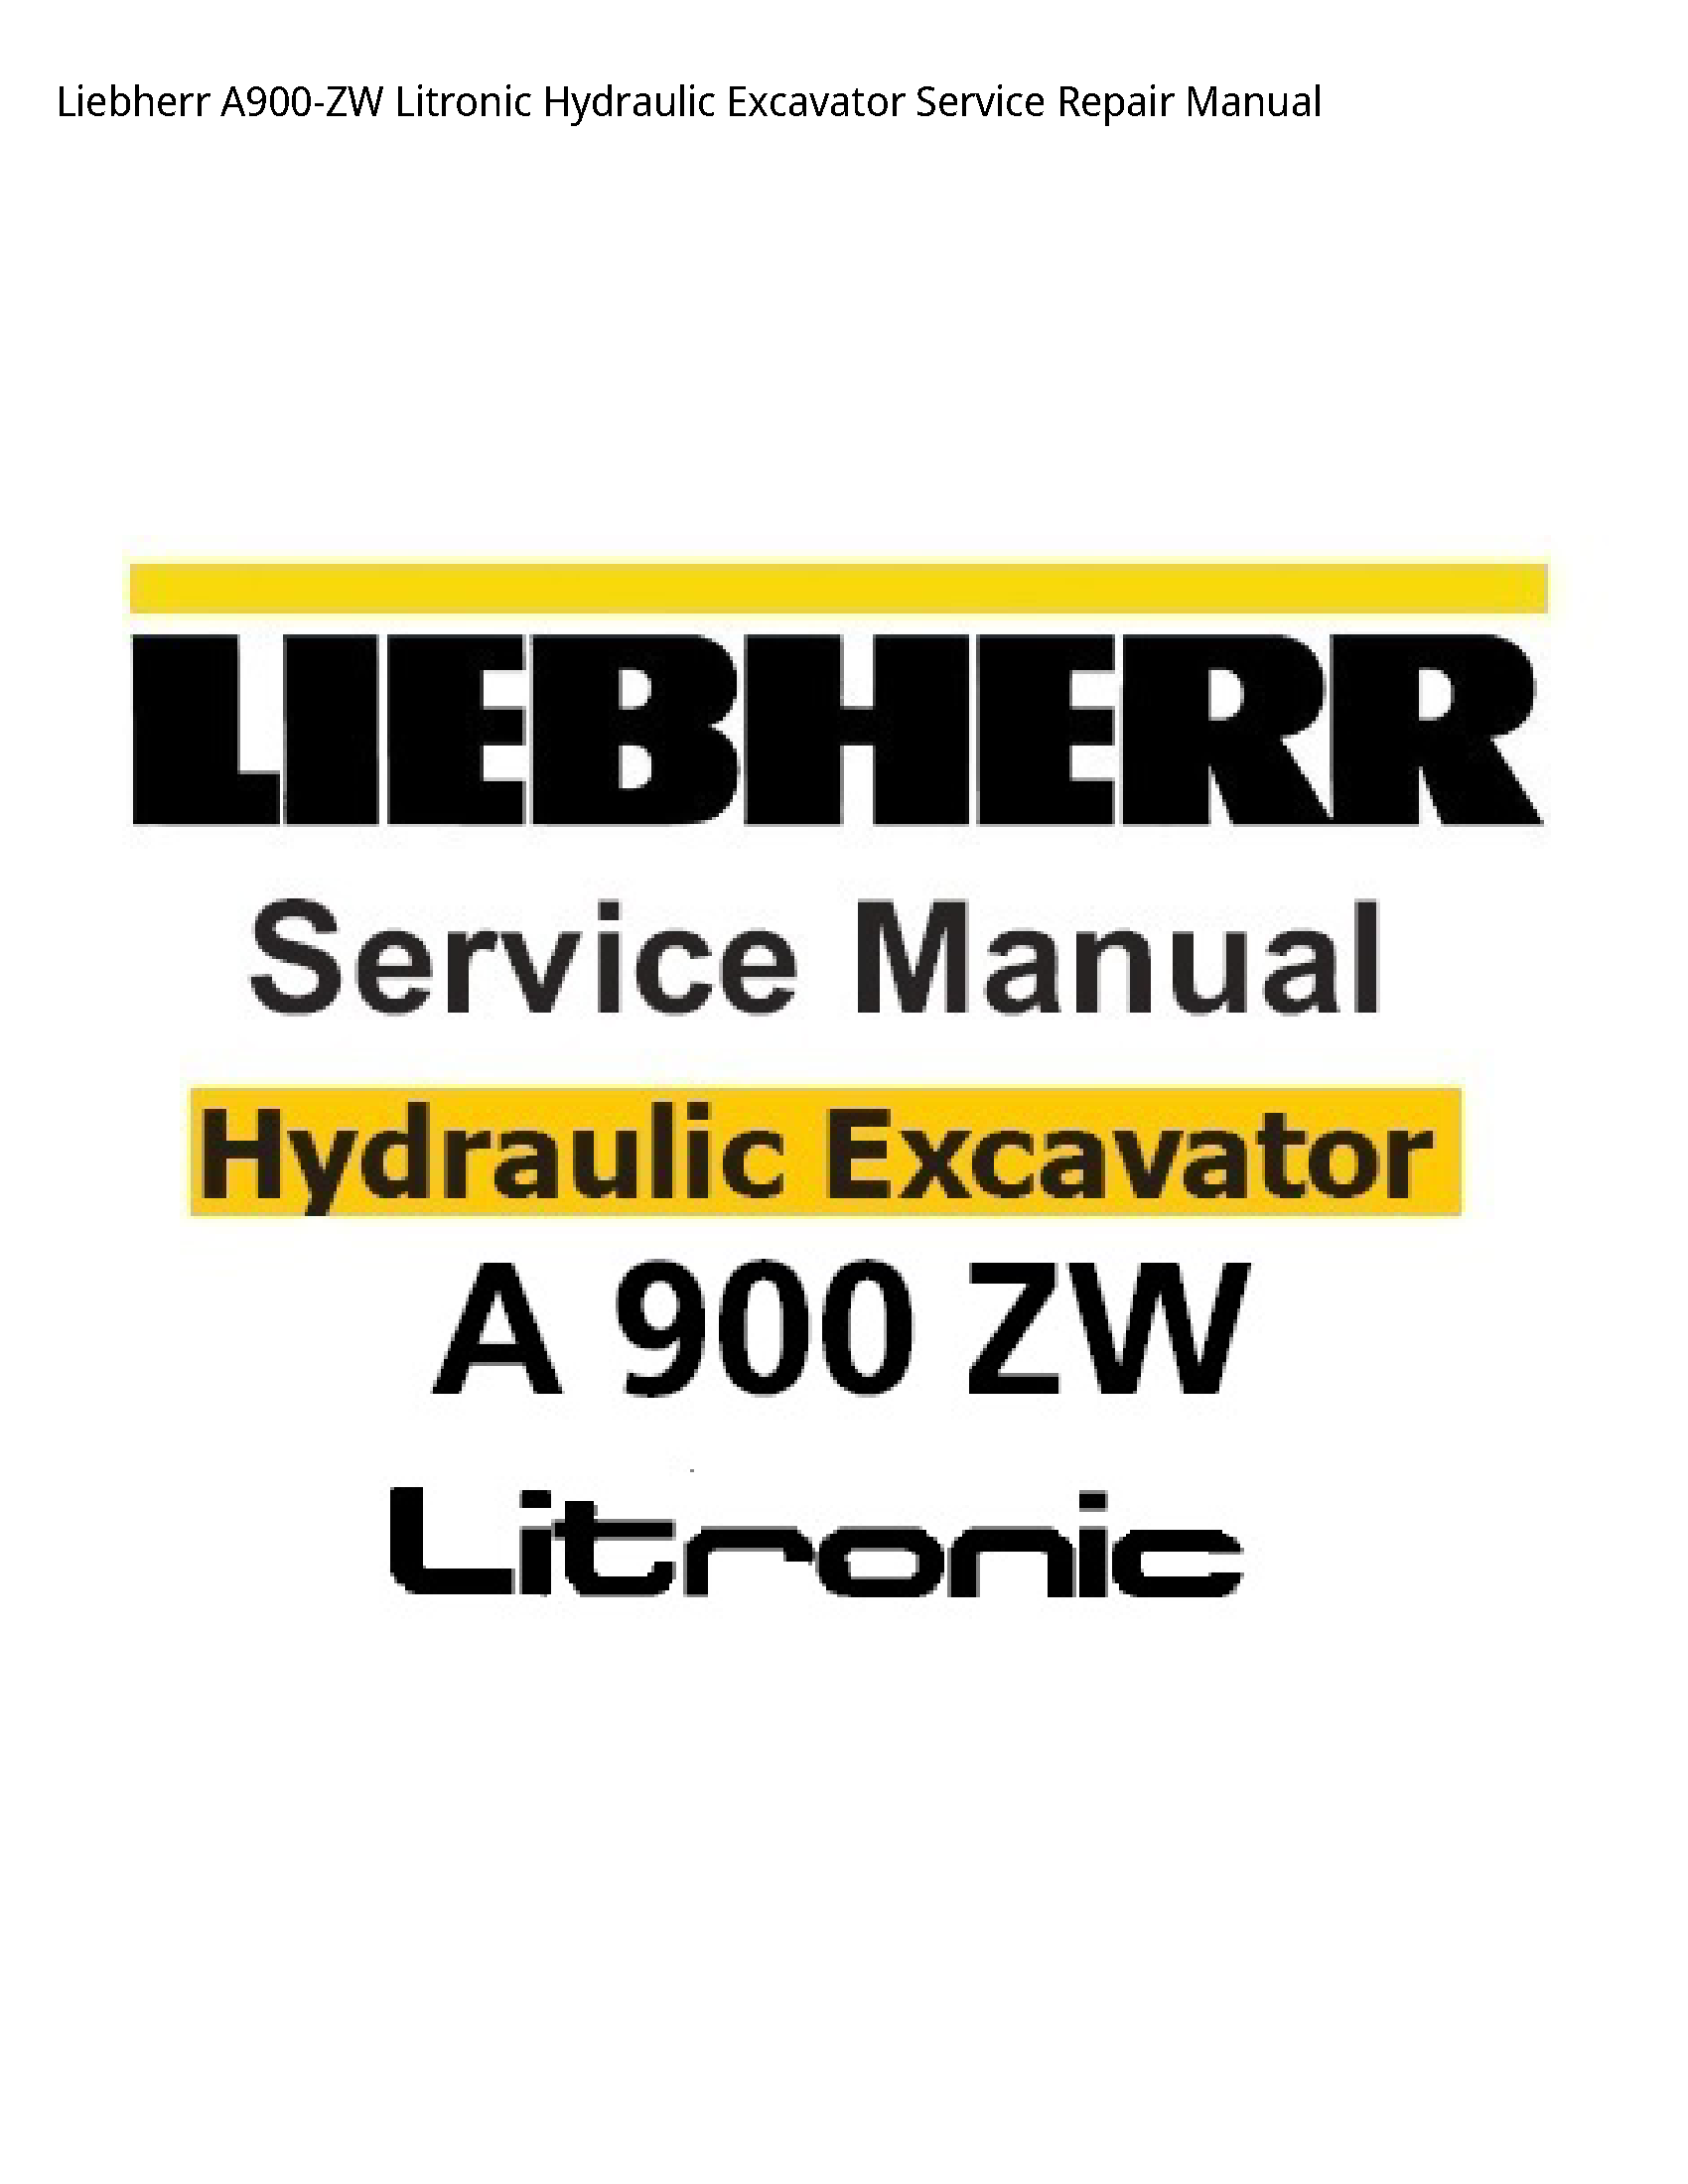 Liebherr A900-ZW Litronic Hydraulic Excavator manual